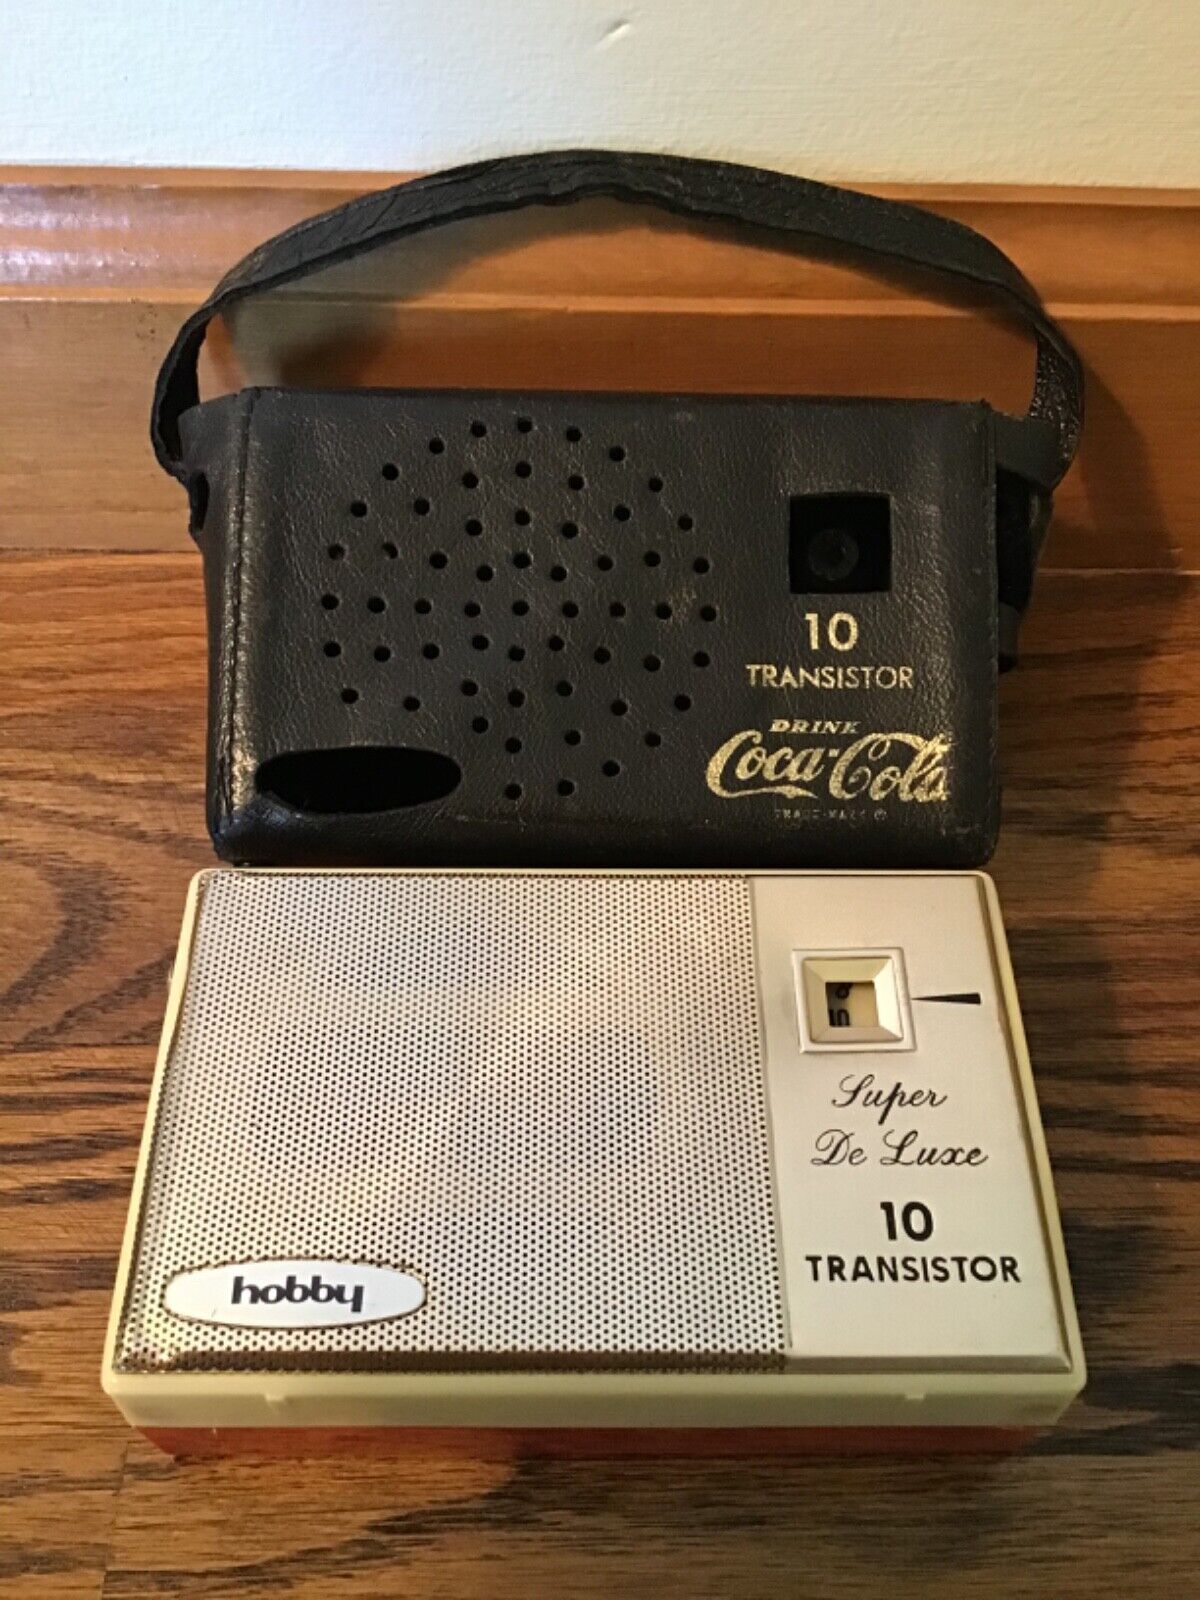 1960's 10 Transistor DRINK Coca Cola Carry Case With Super De Luxe Radio WORKS